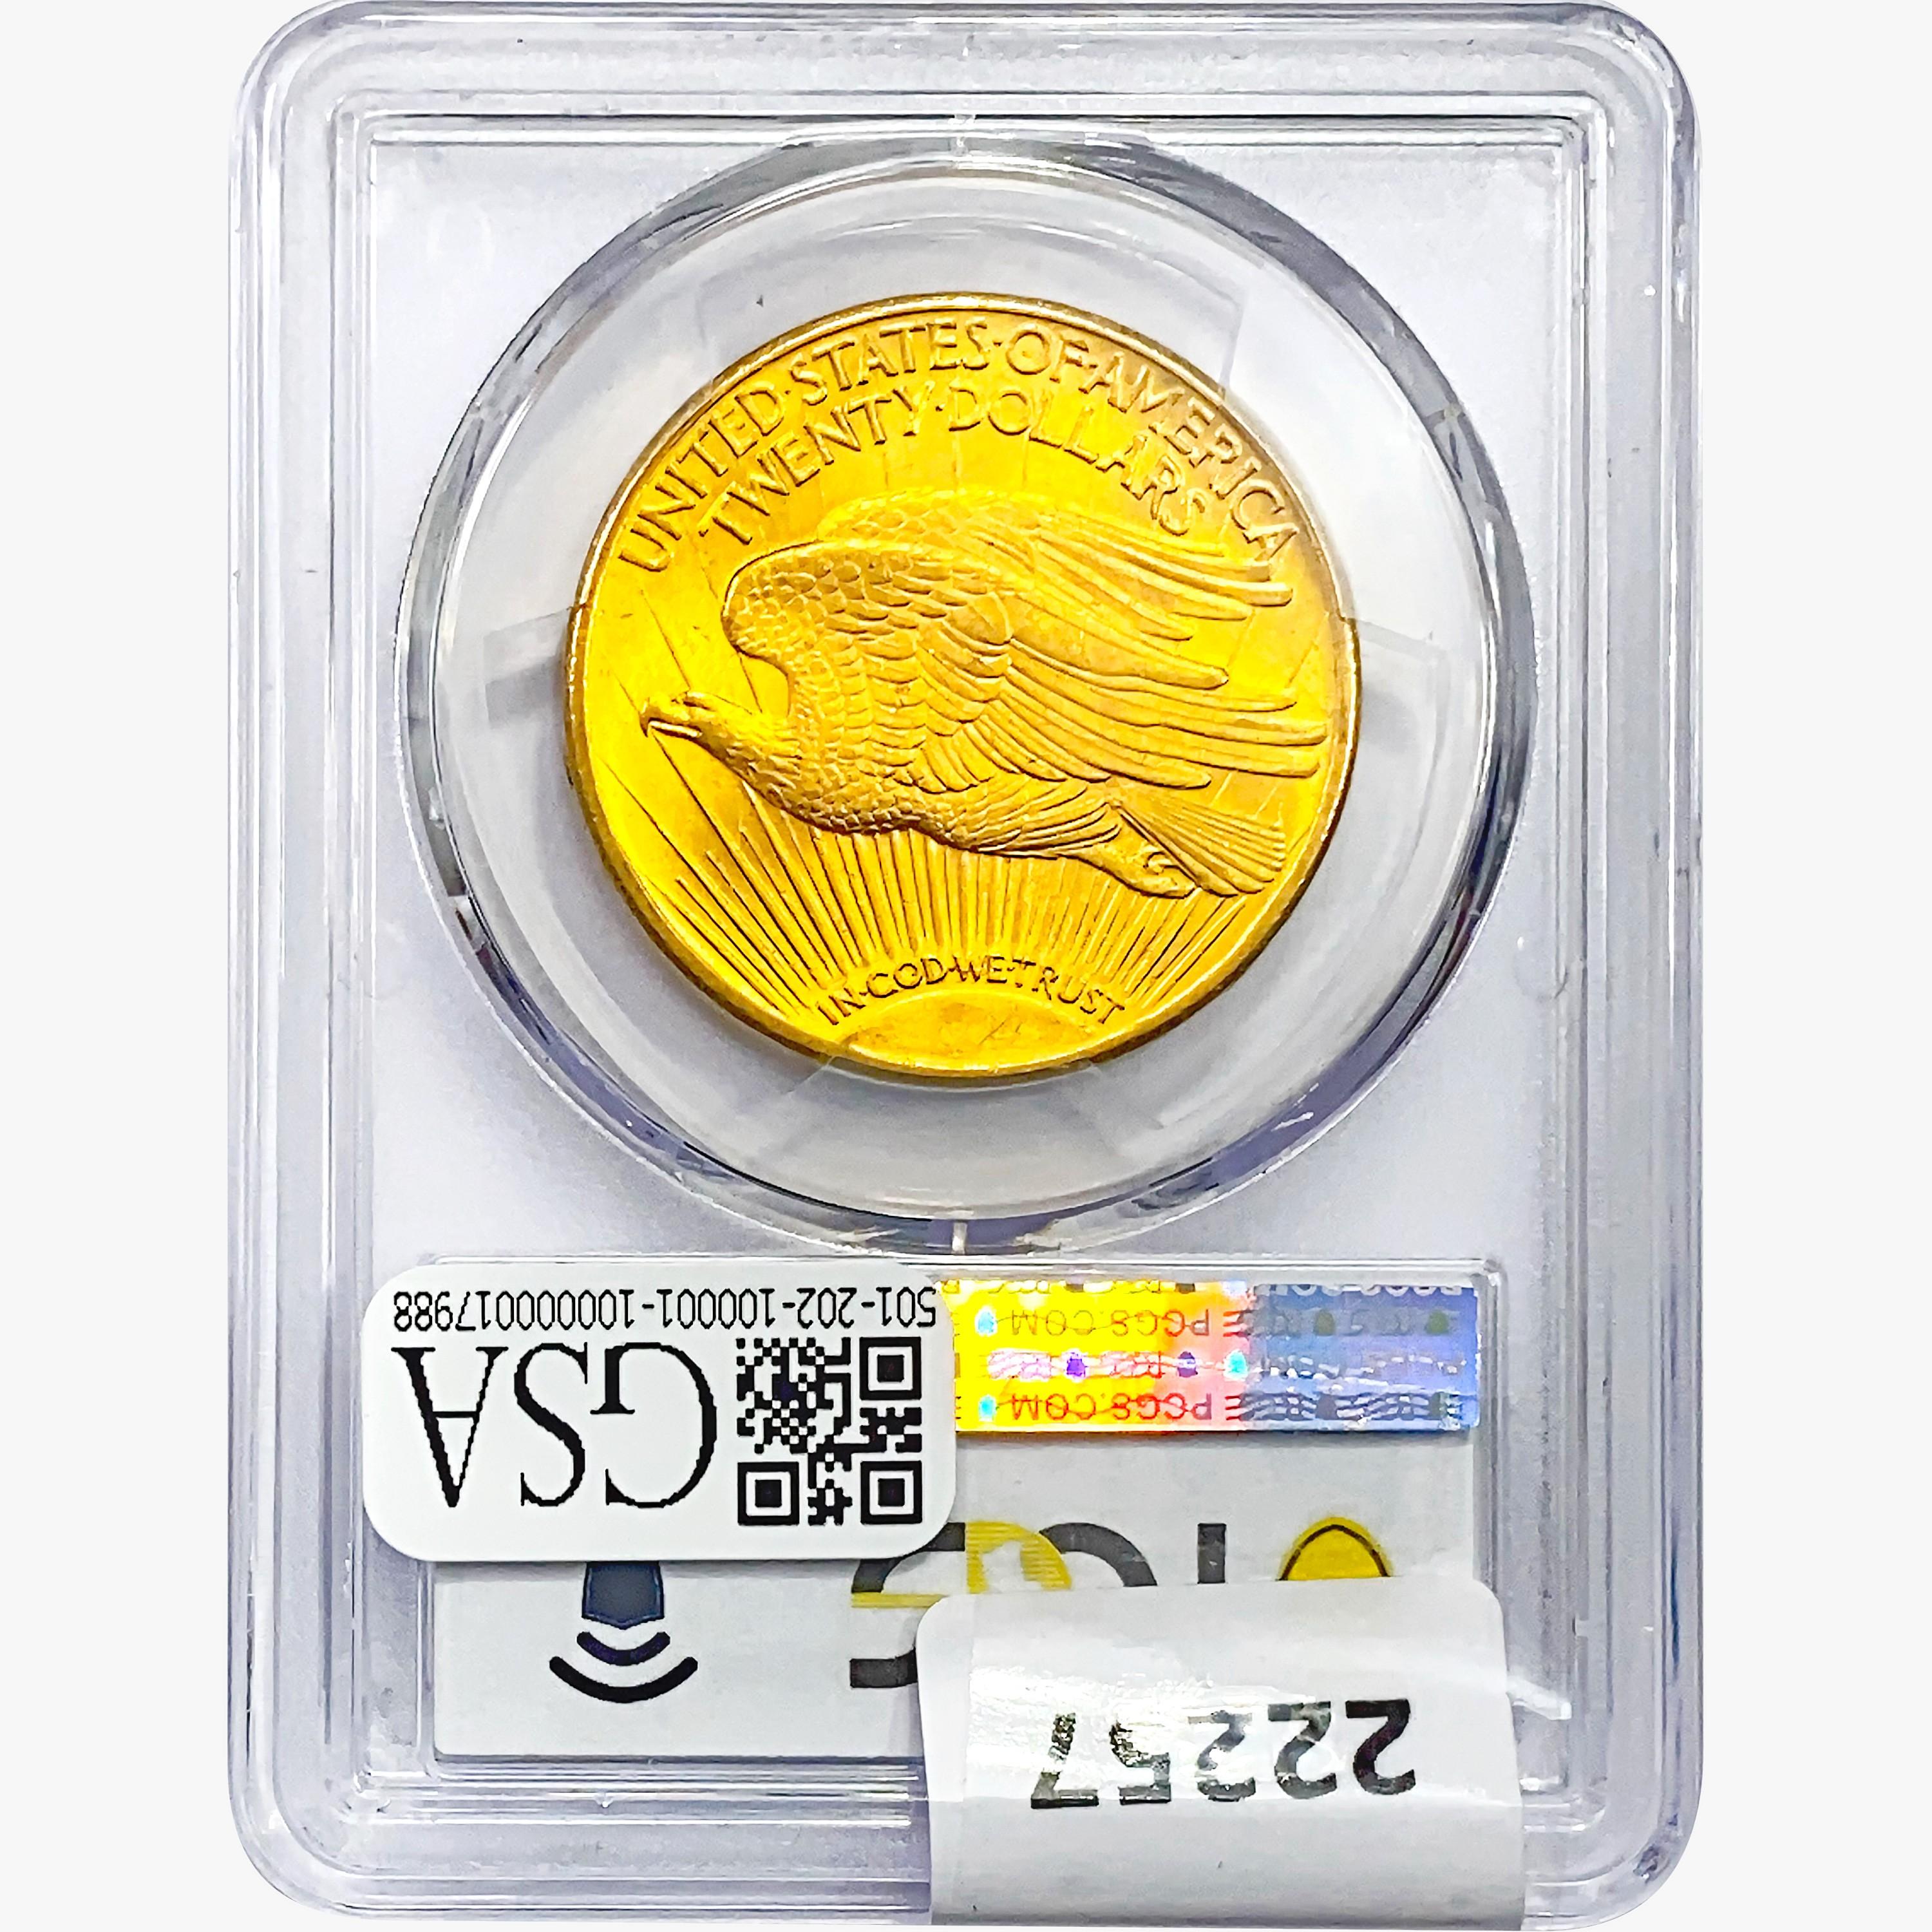 1924 $20 Gold Double Eagle PCGS MS62